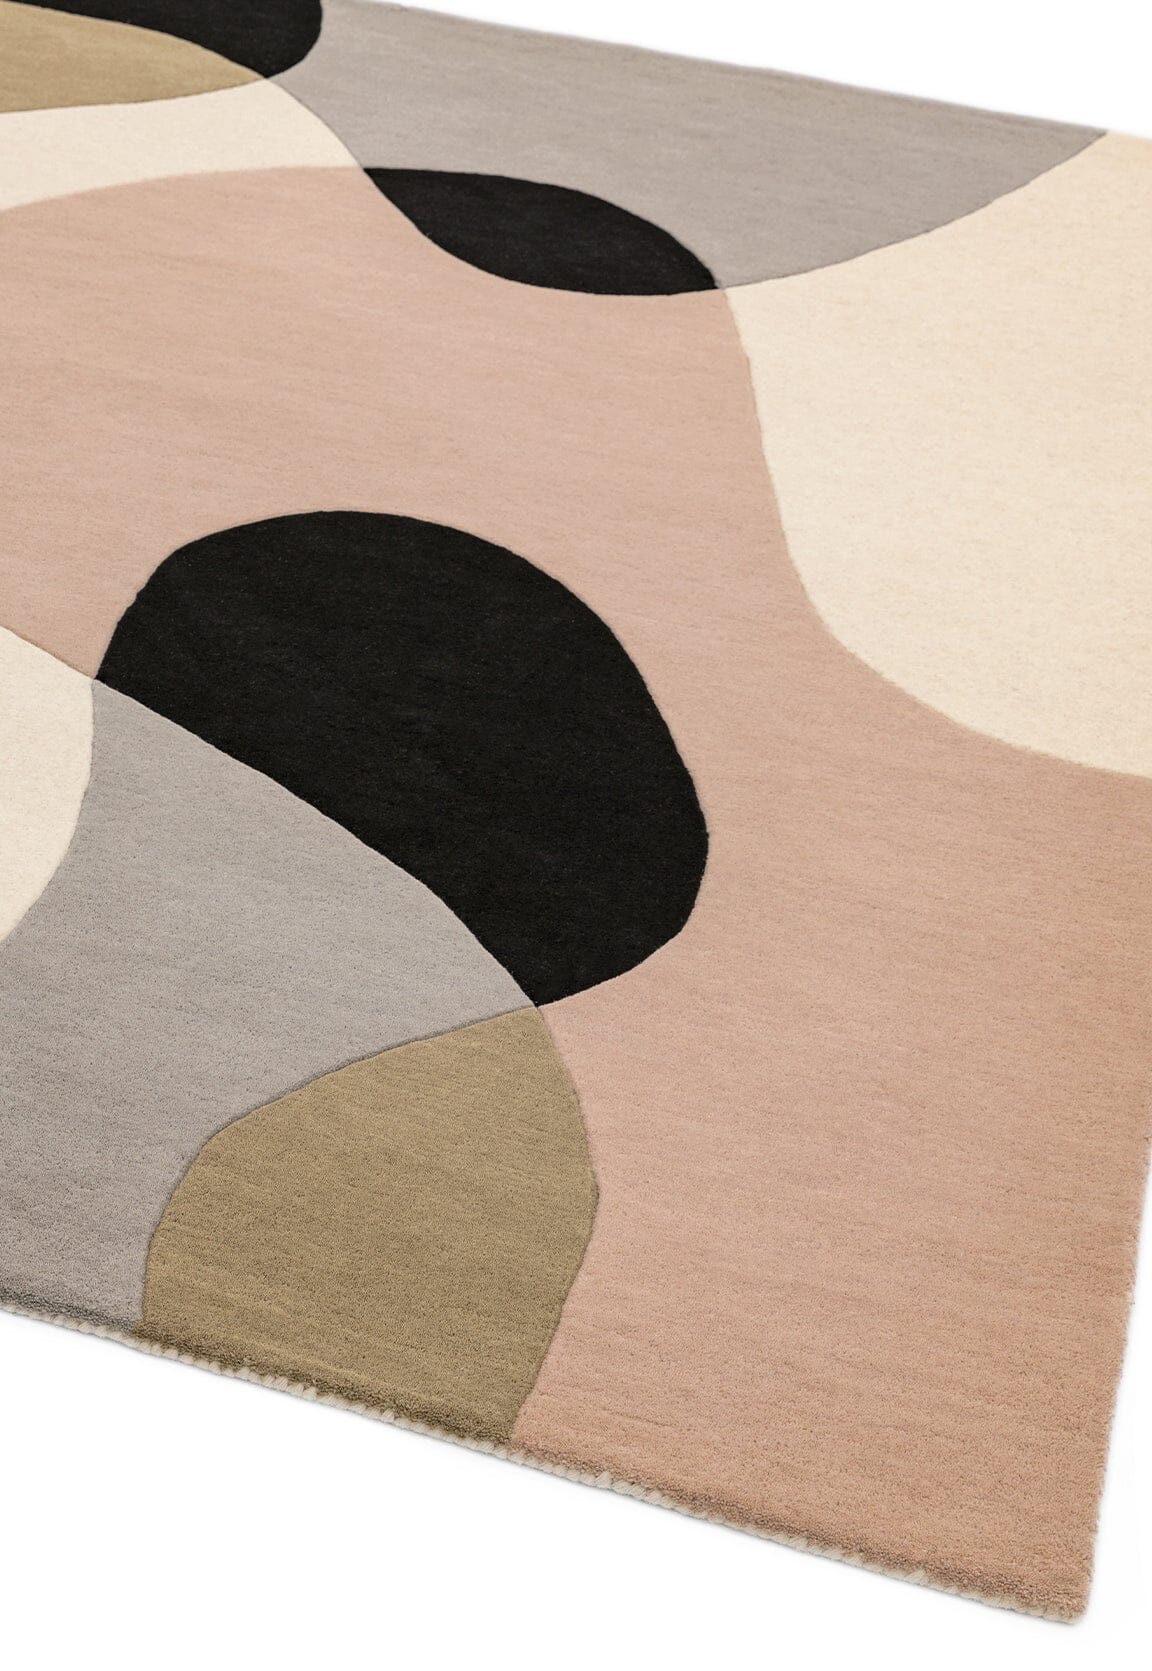 Asiatic Carpets Matrix Hand Tufted Rug Arc Pastel - 200 x 300cm